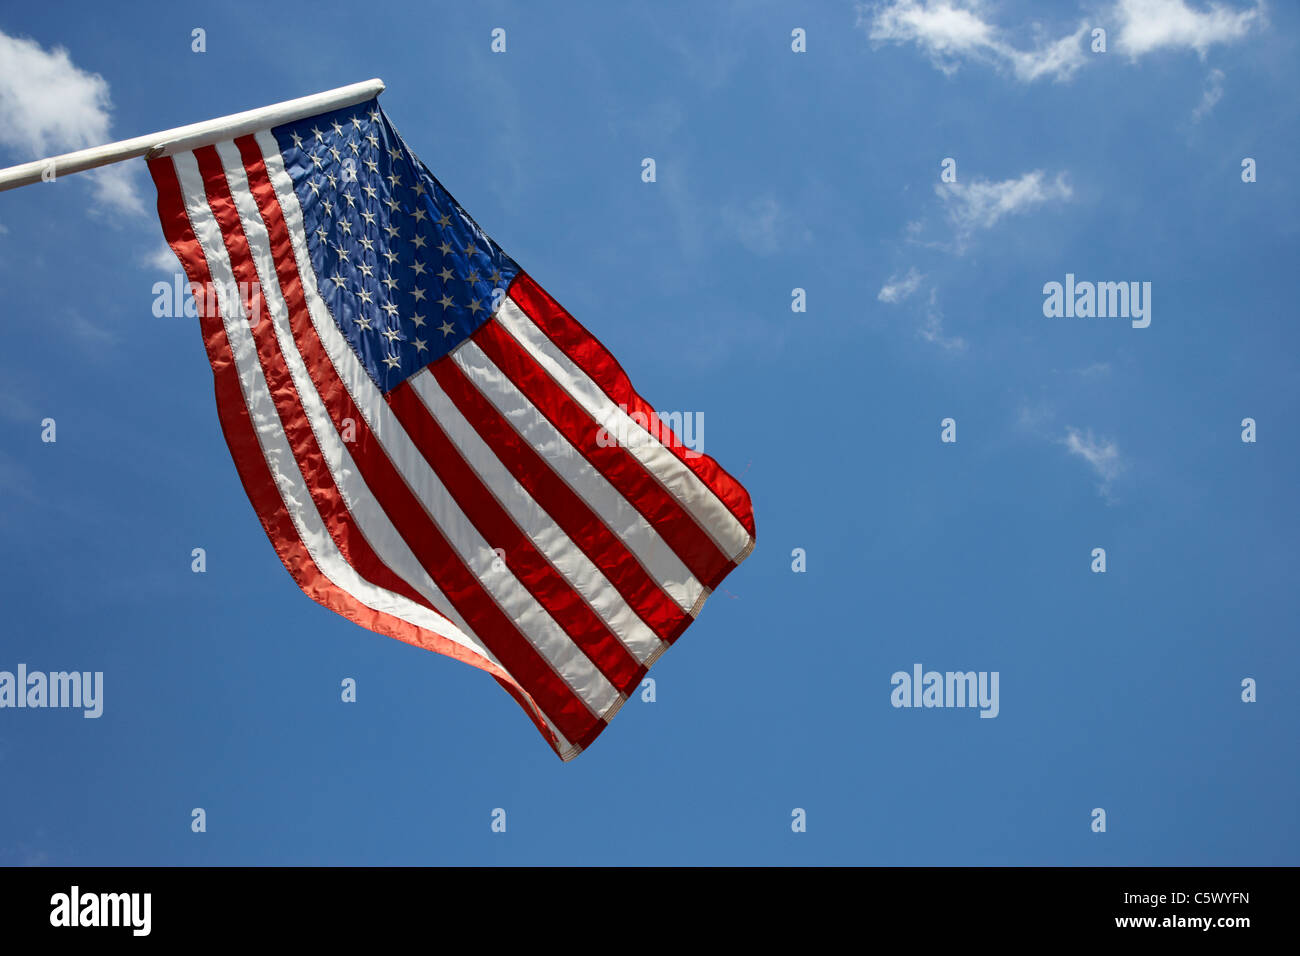 us american flag on flagpole against blue cloudy sky usa Stock Photo